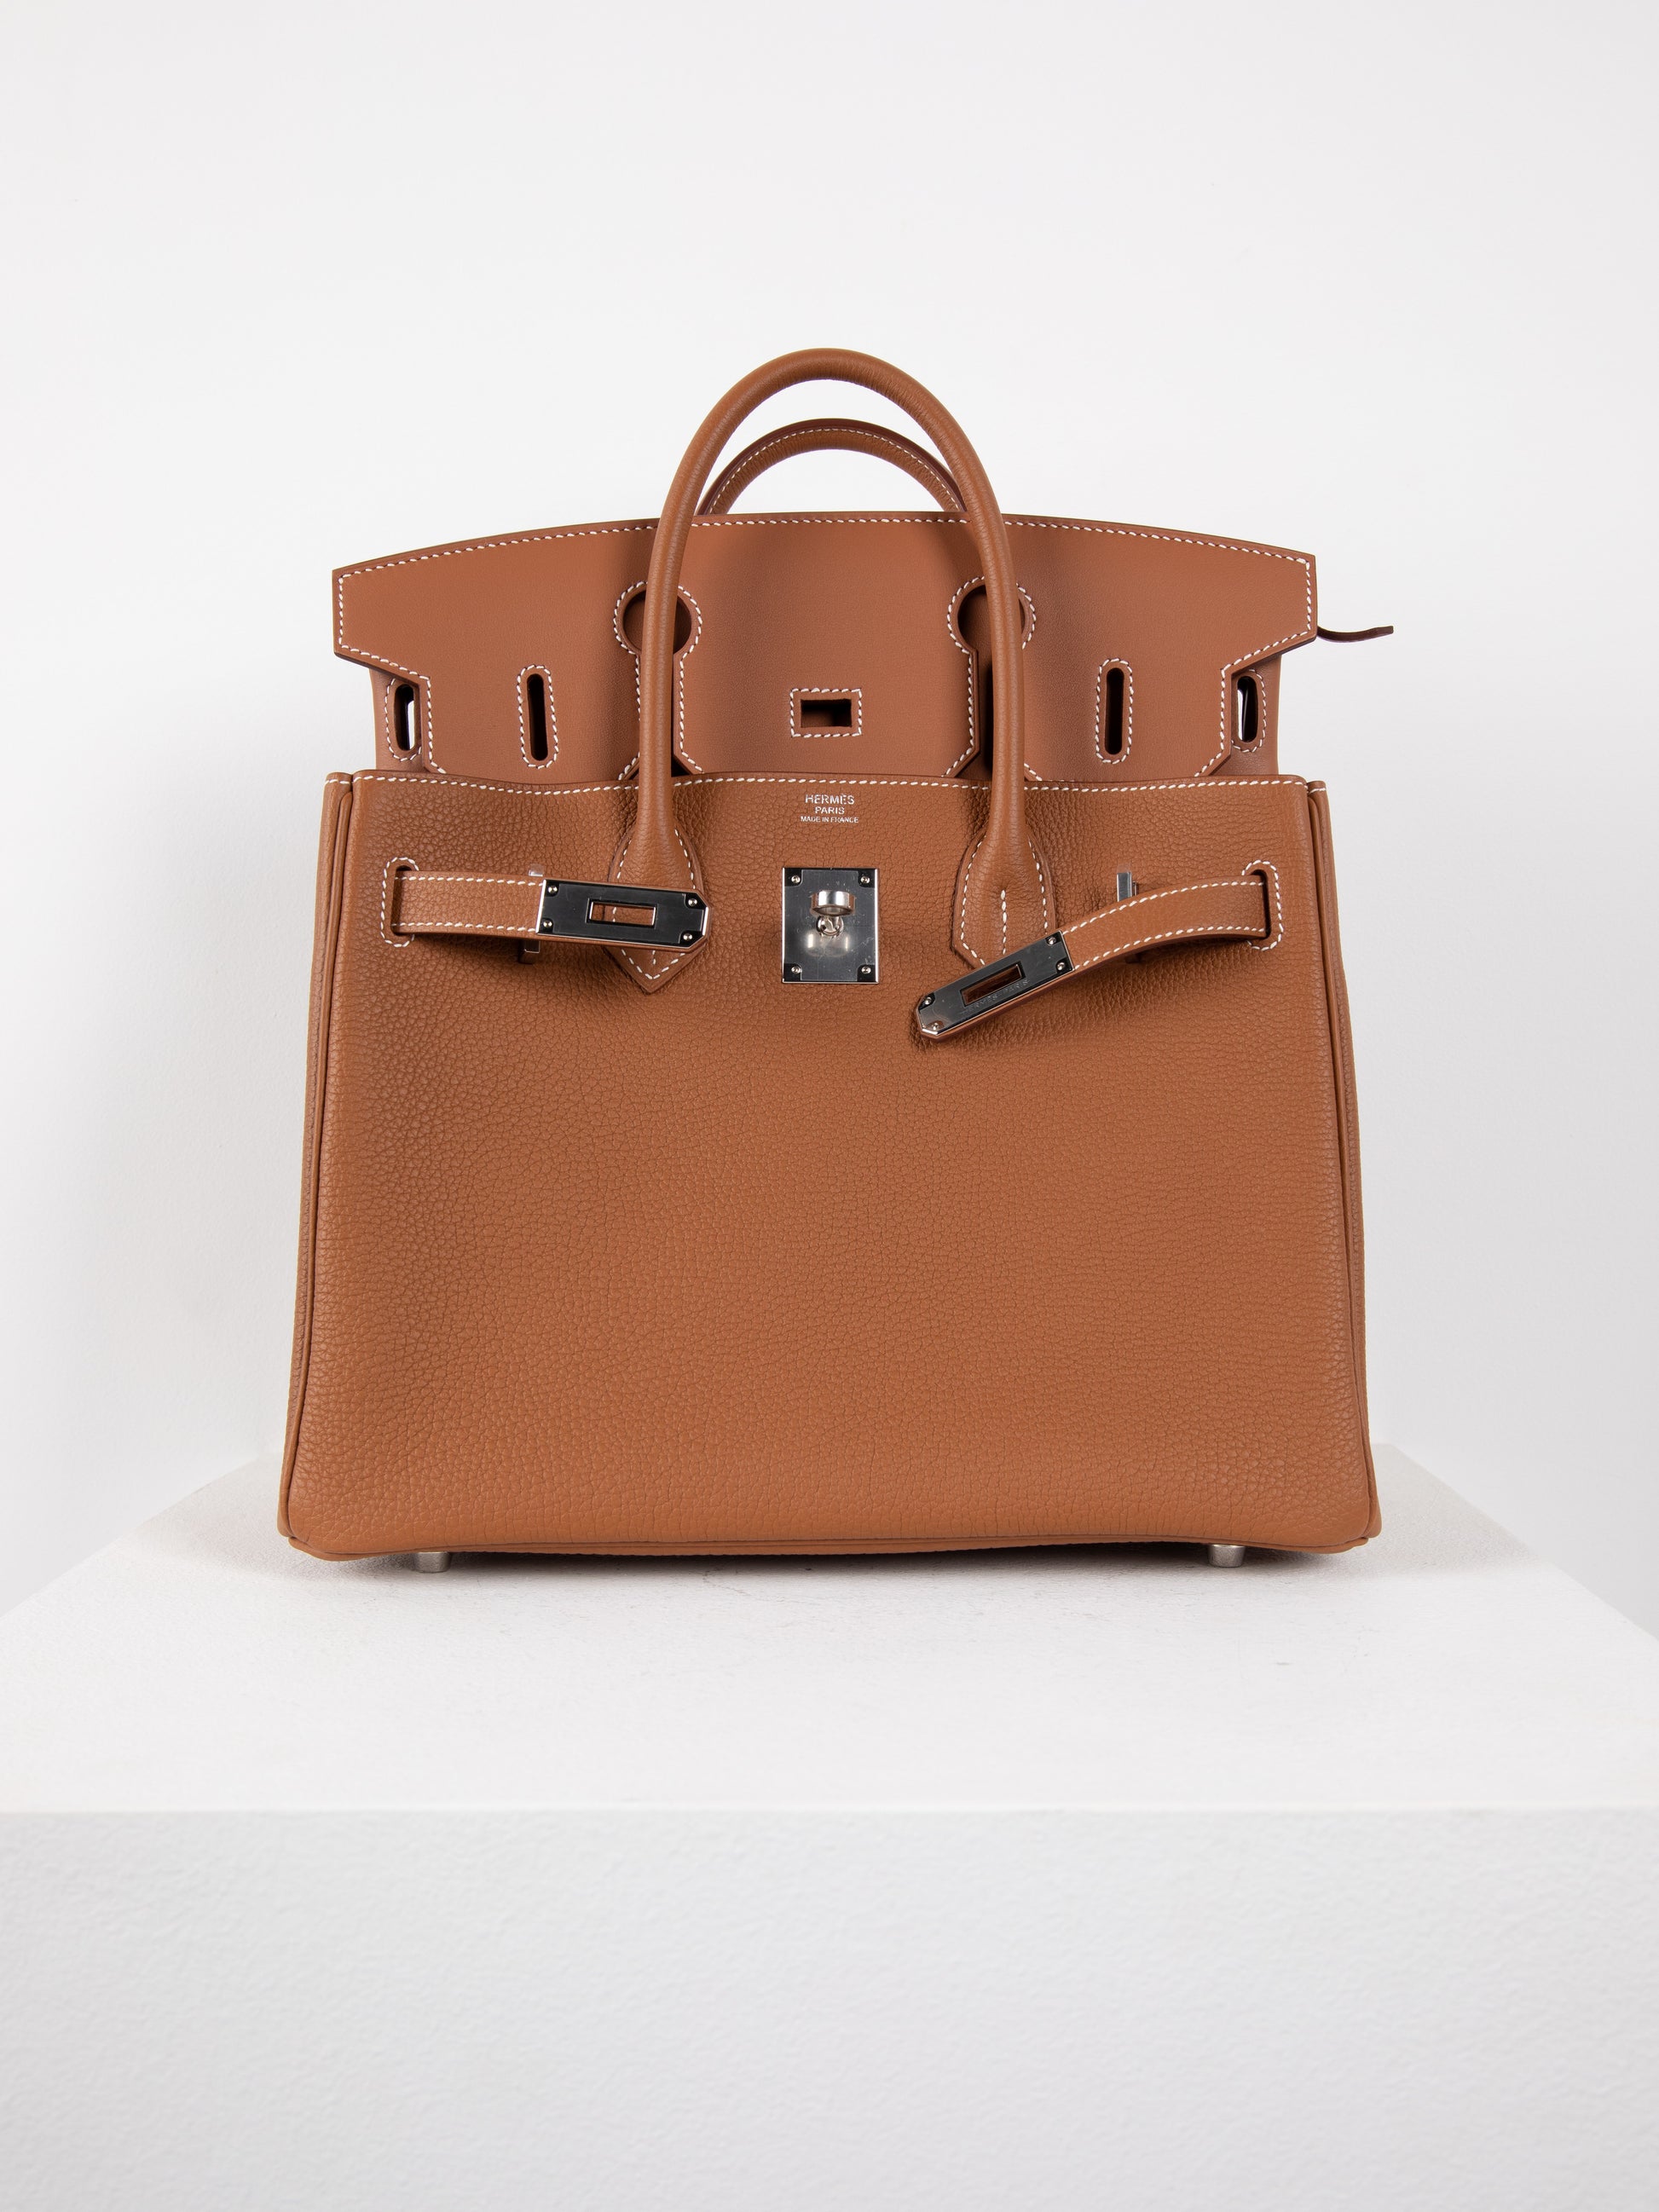 Meet the luxury bag everyone wants – the Hermes 3-in-1 Birkin Bag -  PressReader